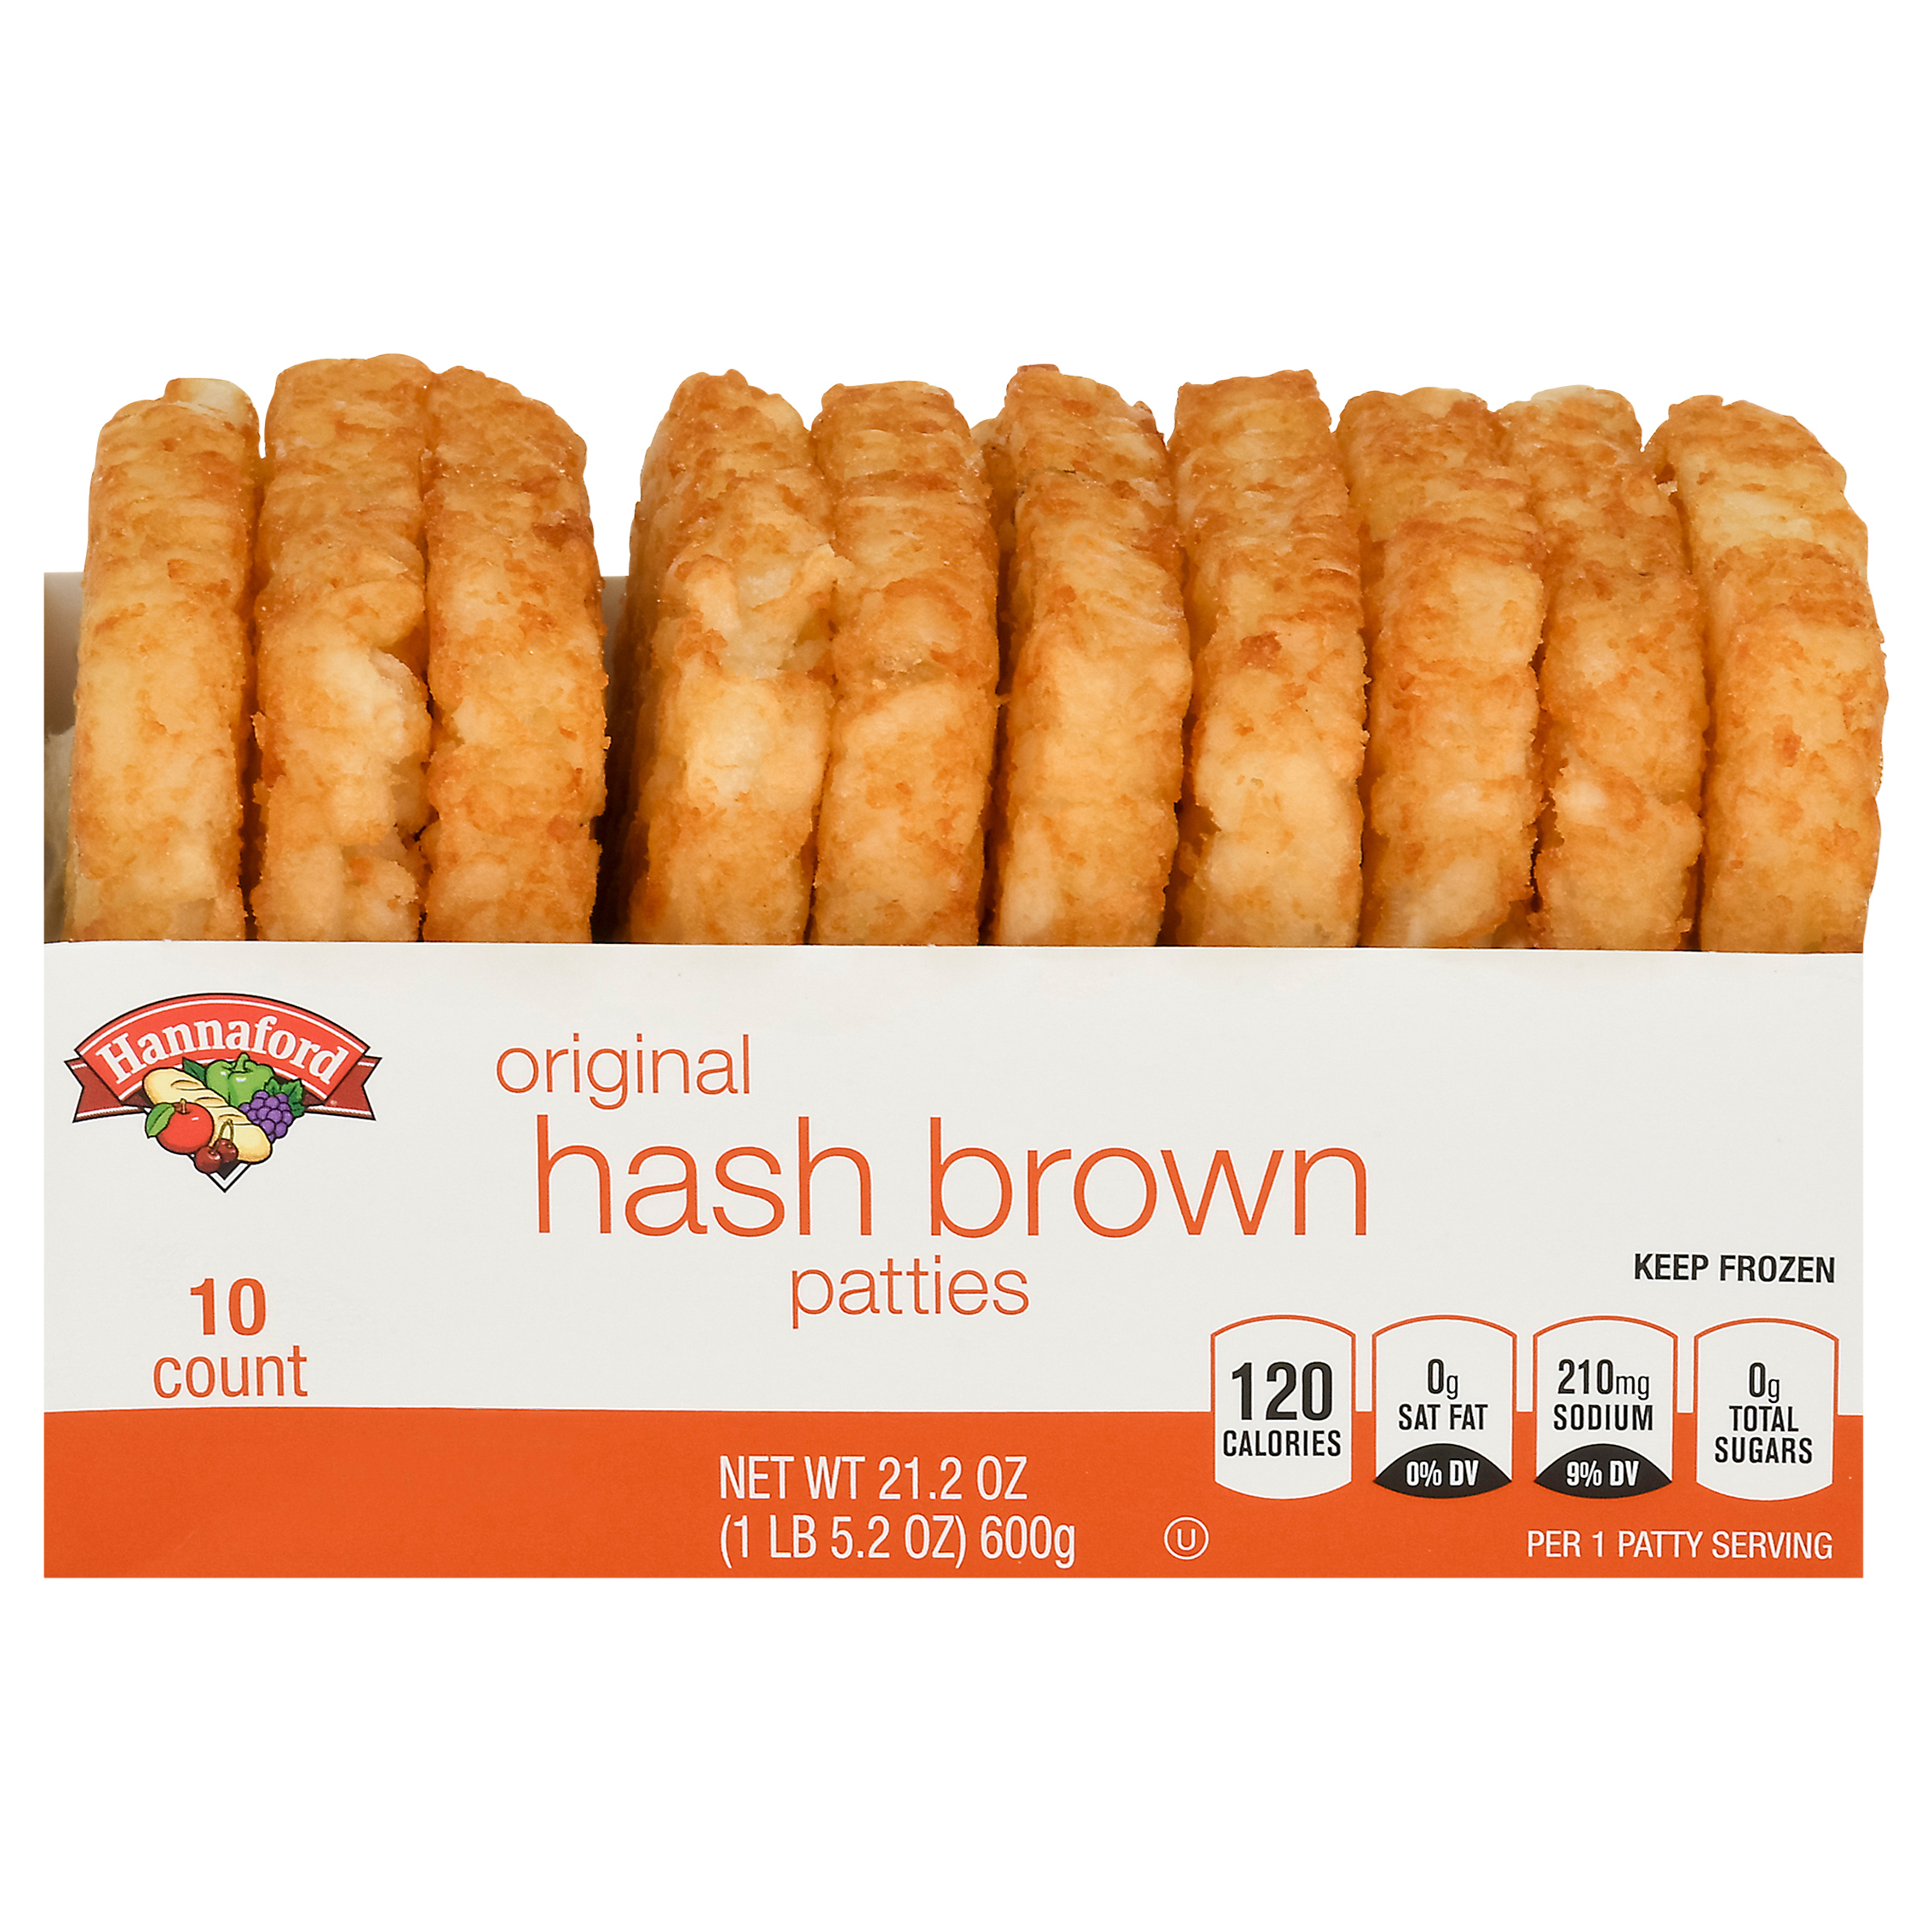 Buy Now, Original Hash Brown Patties